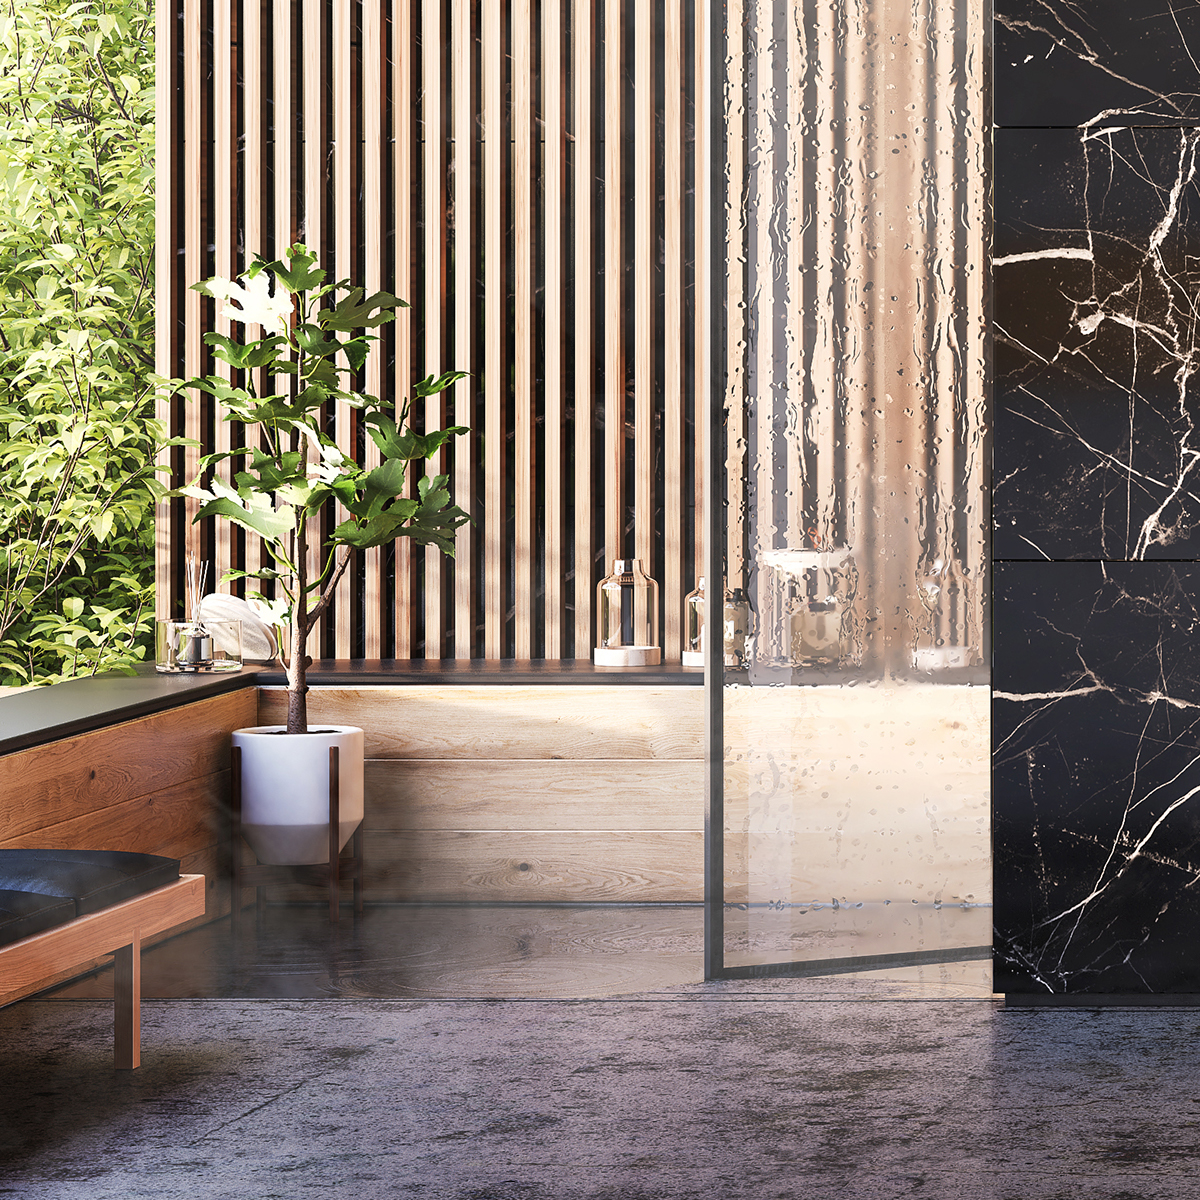 Ambient Marble wood SHOWER Render Interior concrete luxury architecture